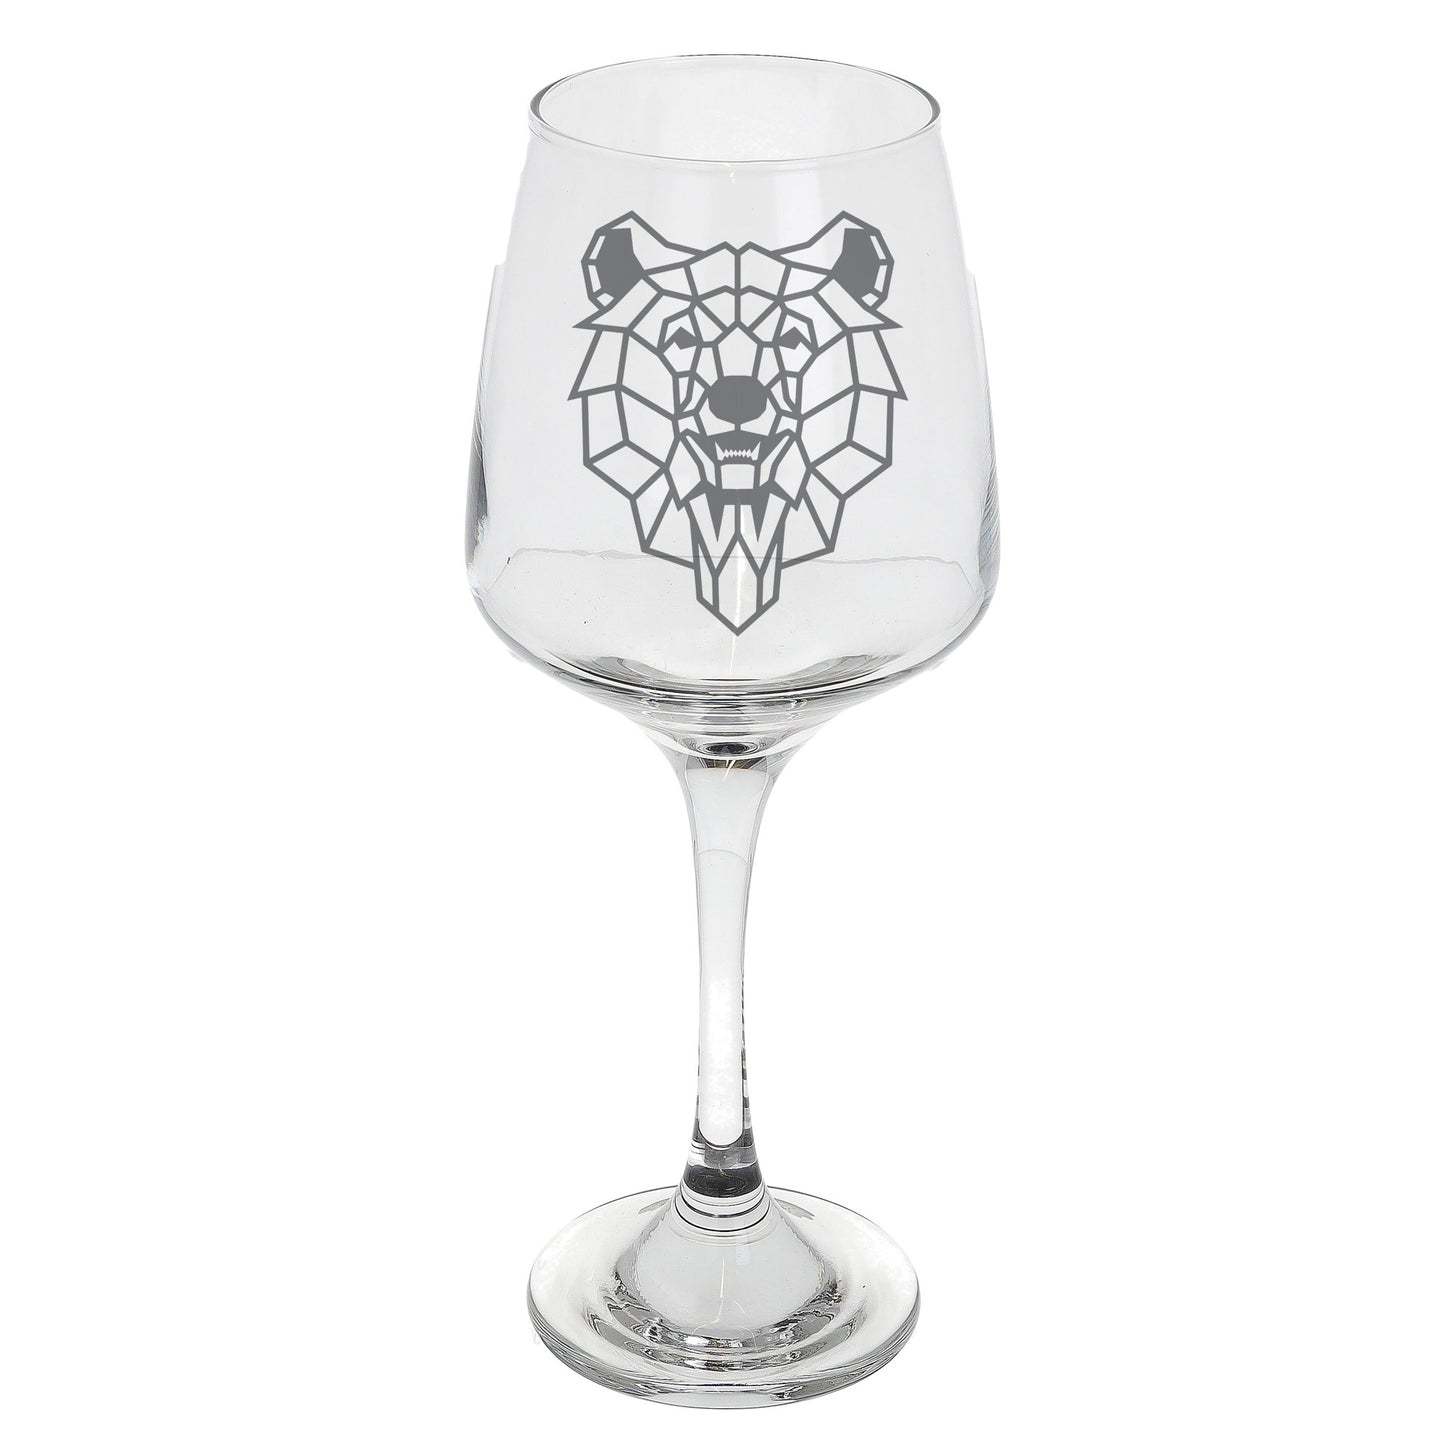 Bear Engraved Wine Glass  - Always Looking Good -   